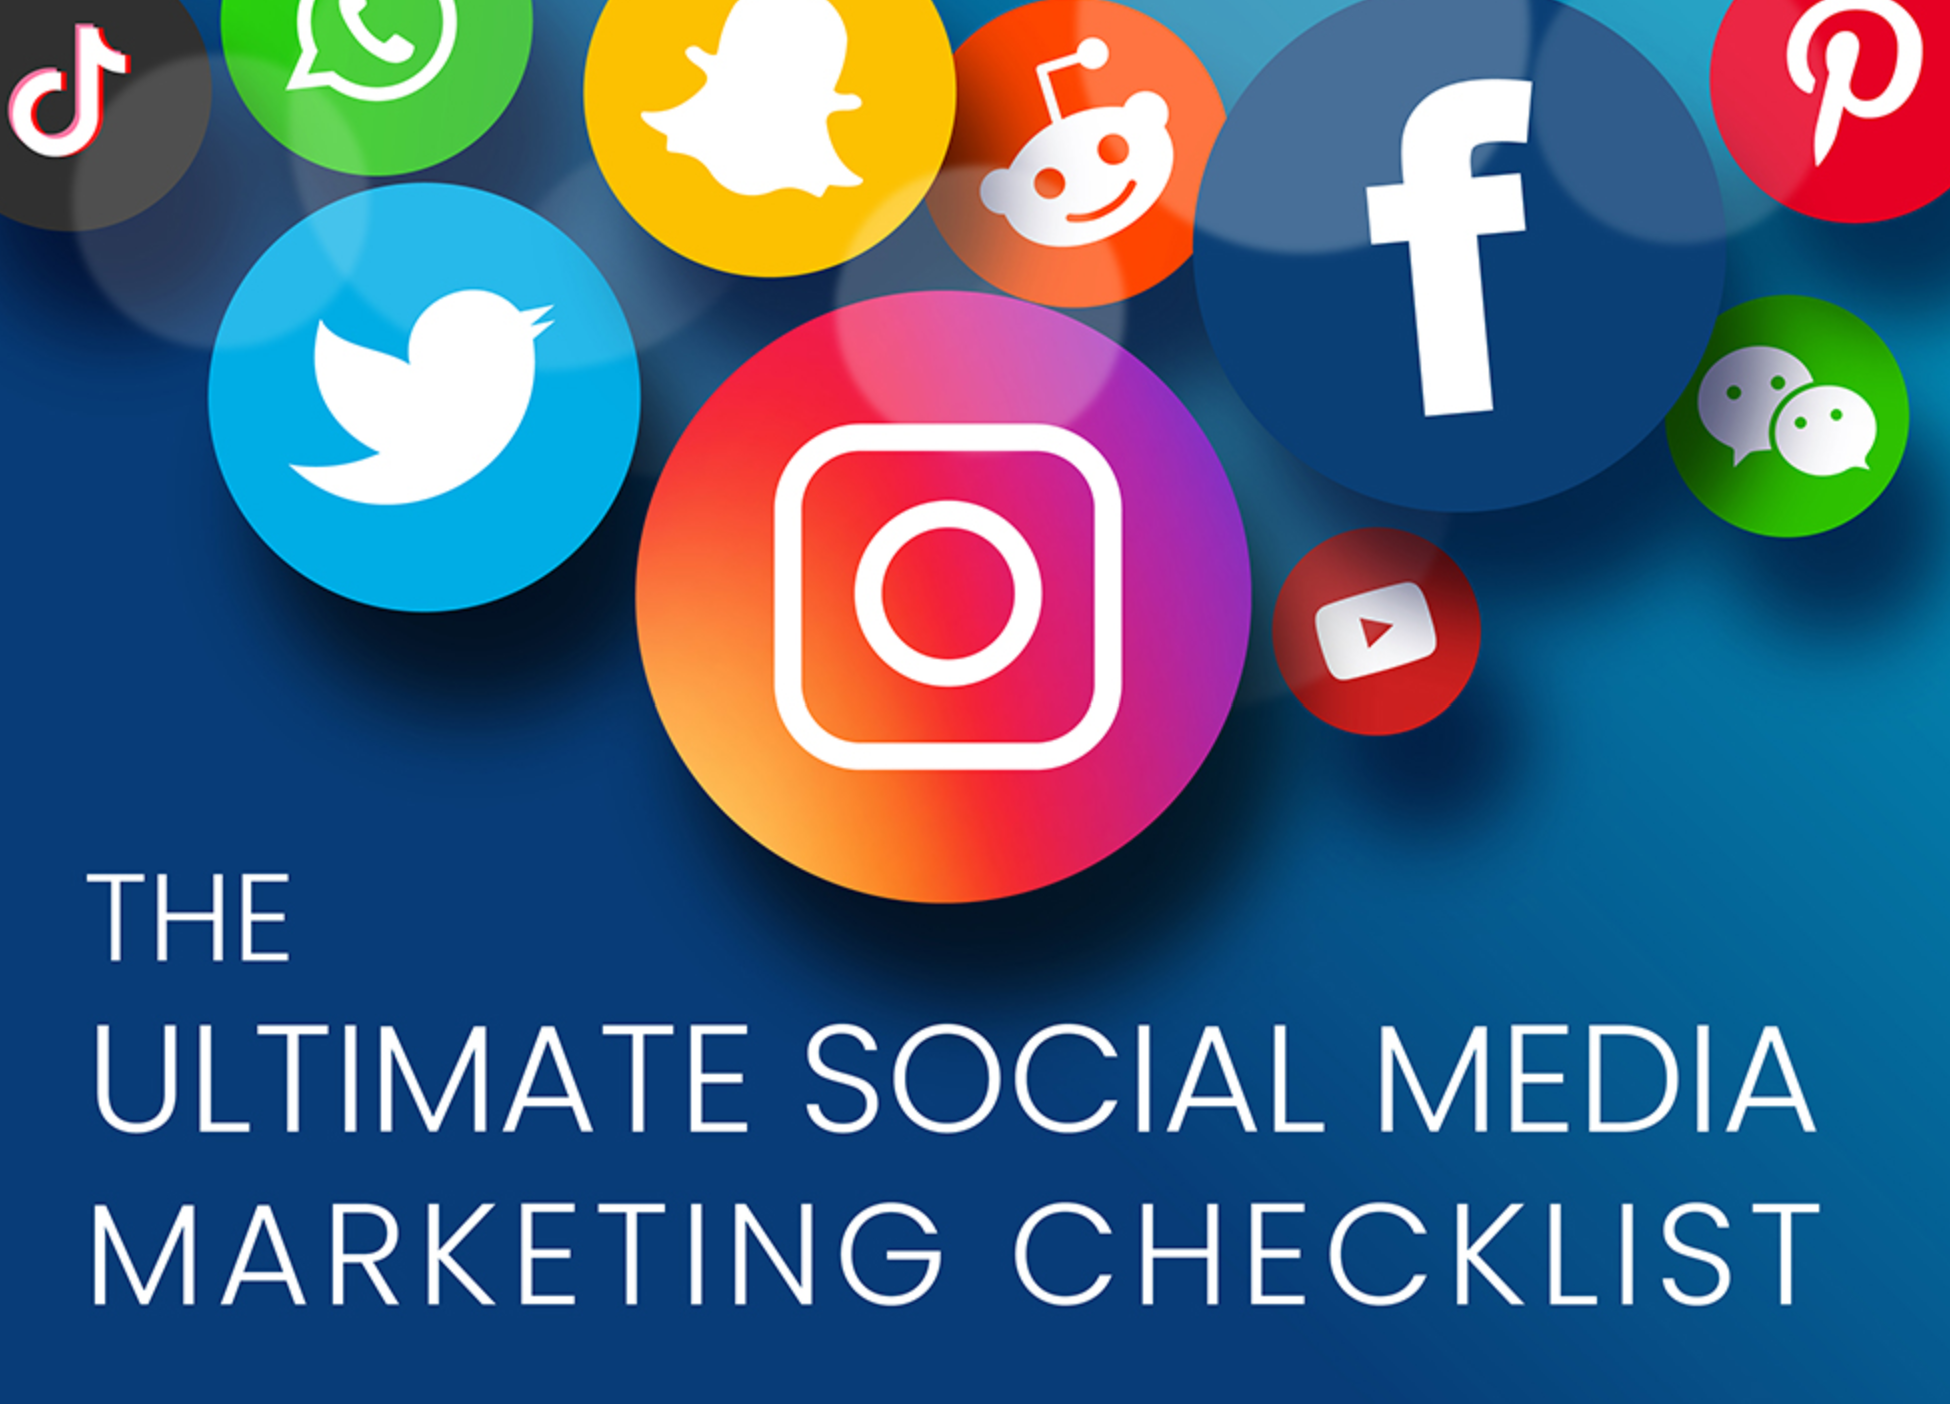 The Ultimate Social Media Marketing Checklist